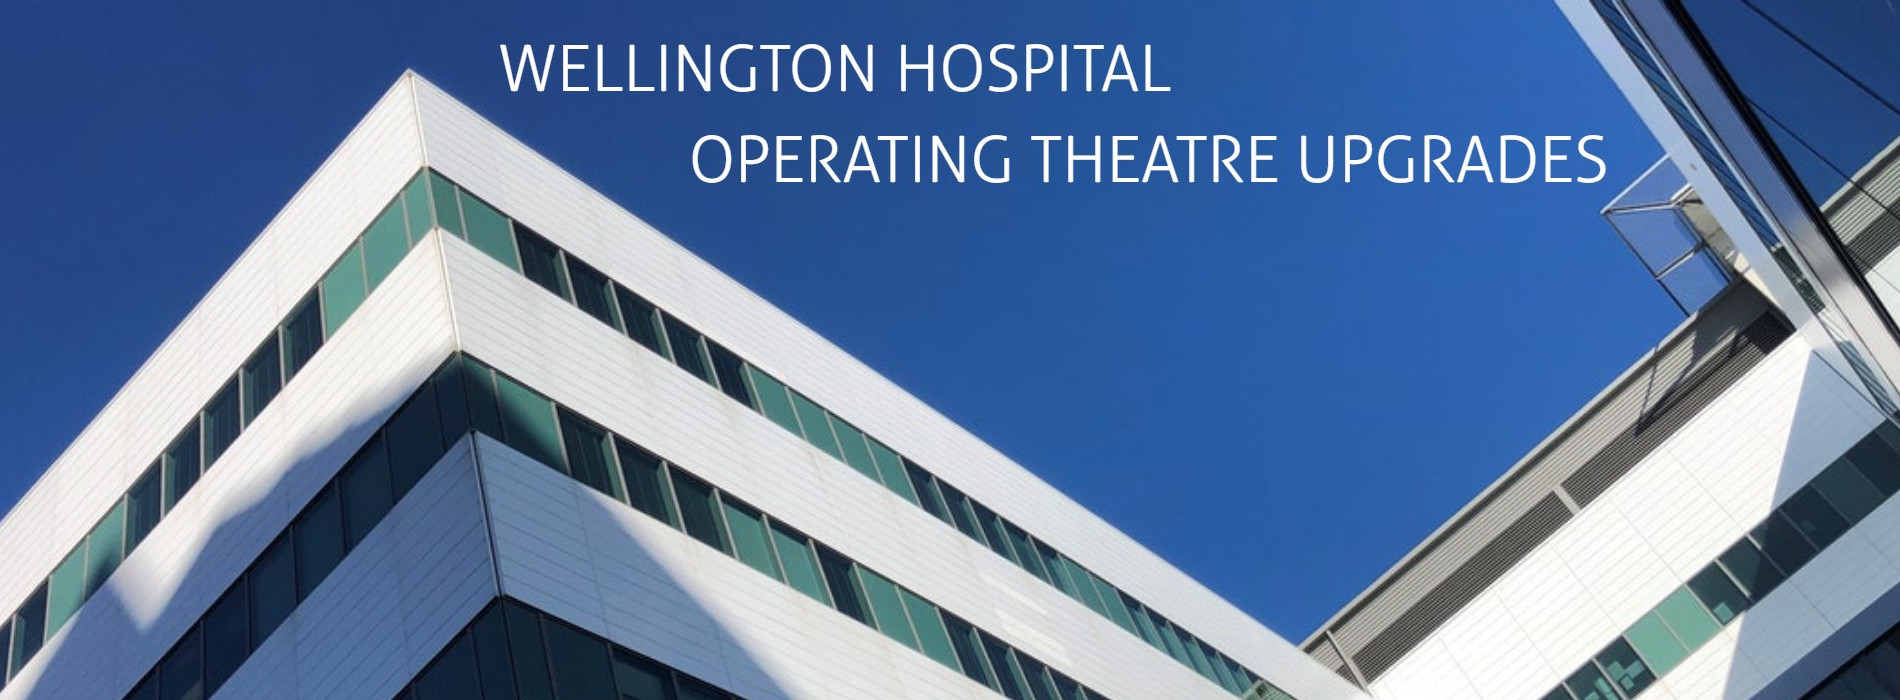 Wellington Hospital Case Study 1 v2